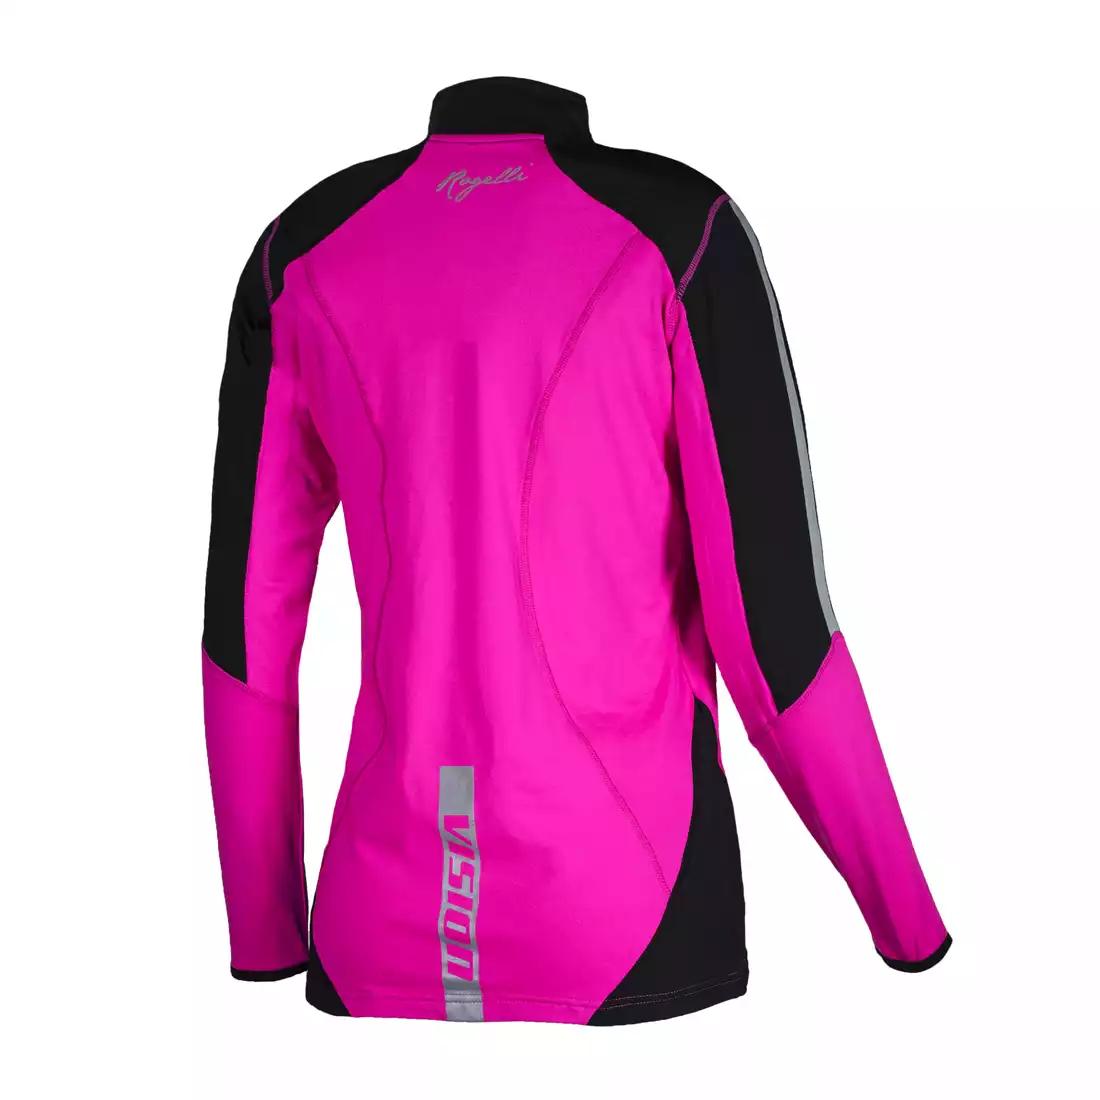 ROGELLI RUN COBY 840.653 - damska bluza do biegania, kolor: różowy